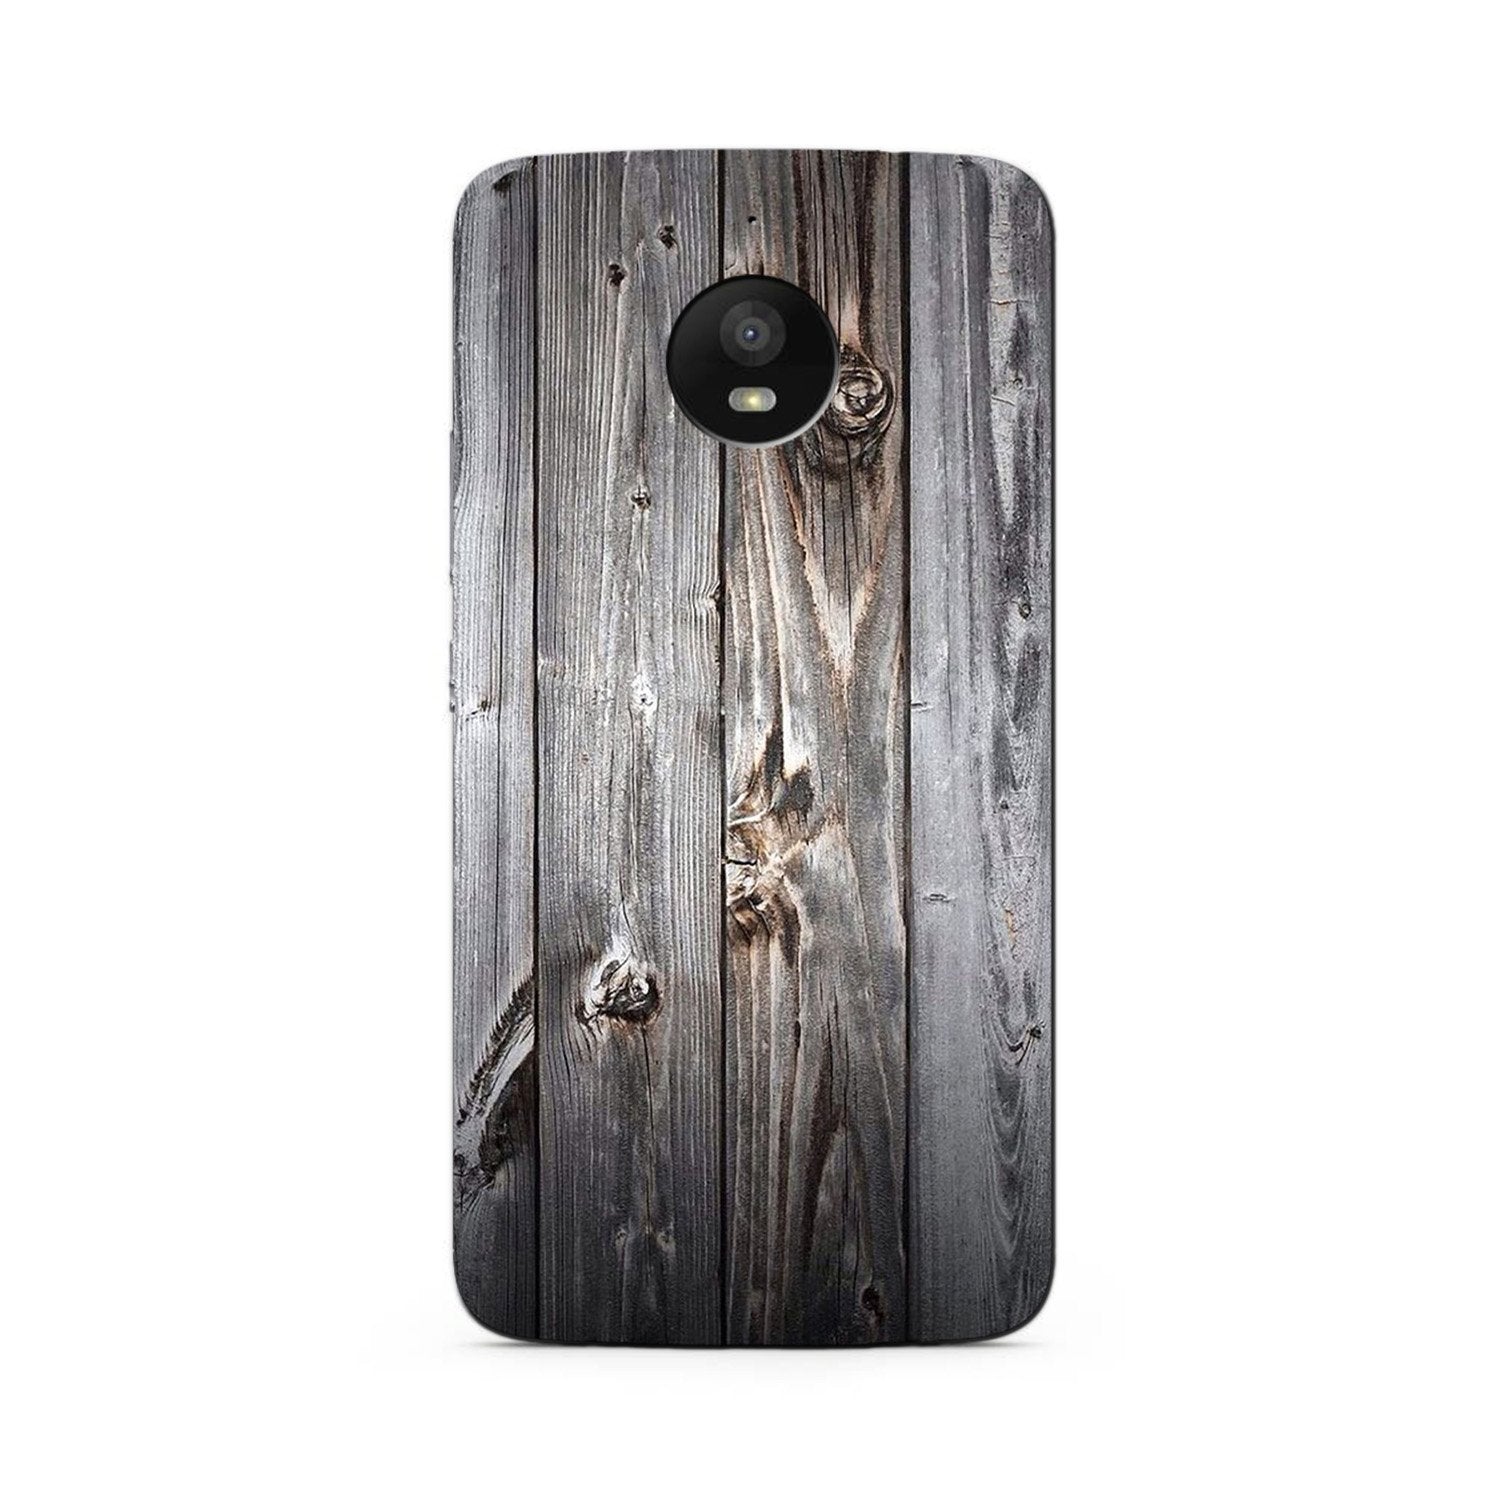 Wooden Look Case for Moto G5s Plus(Design - 114)